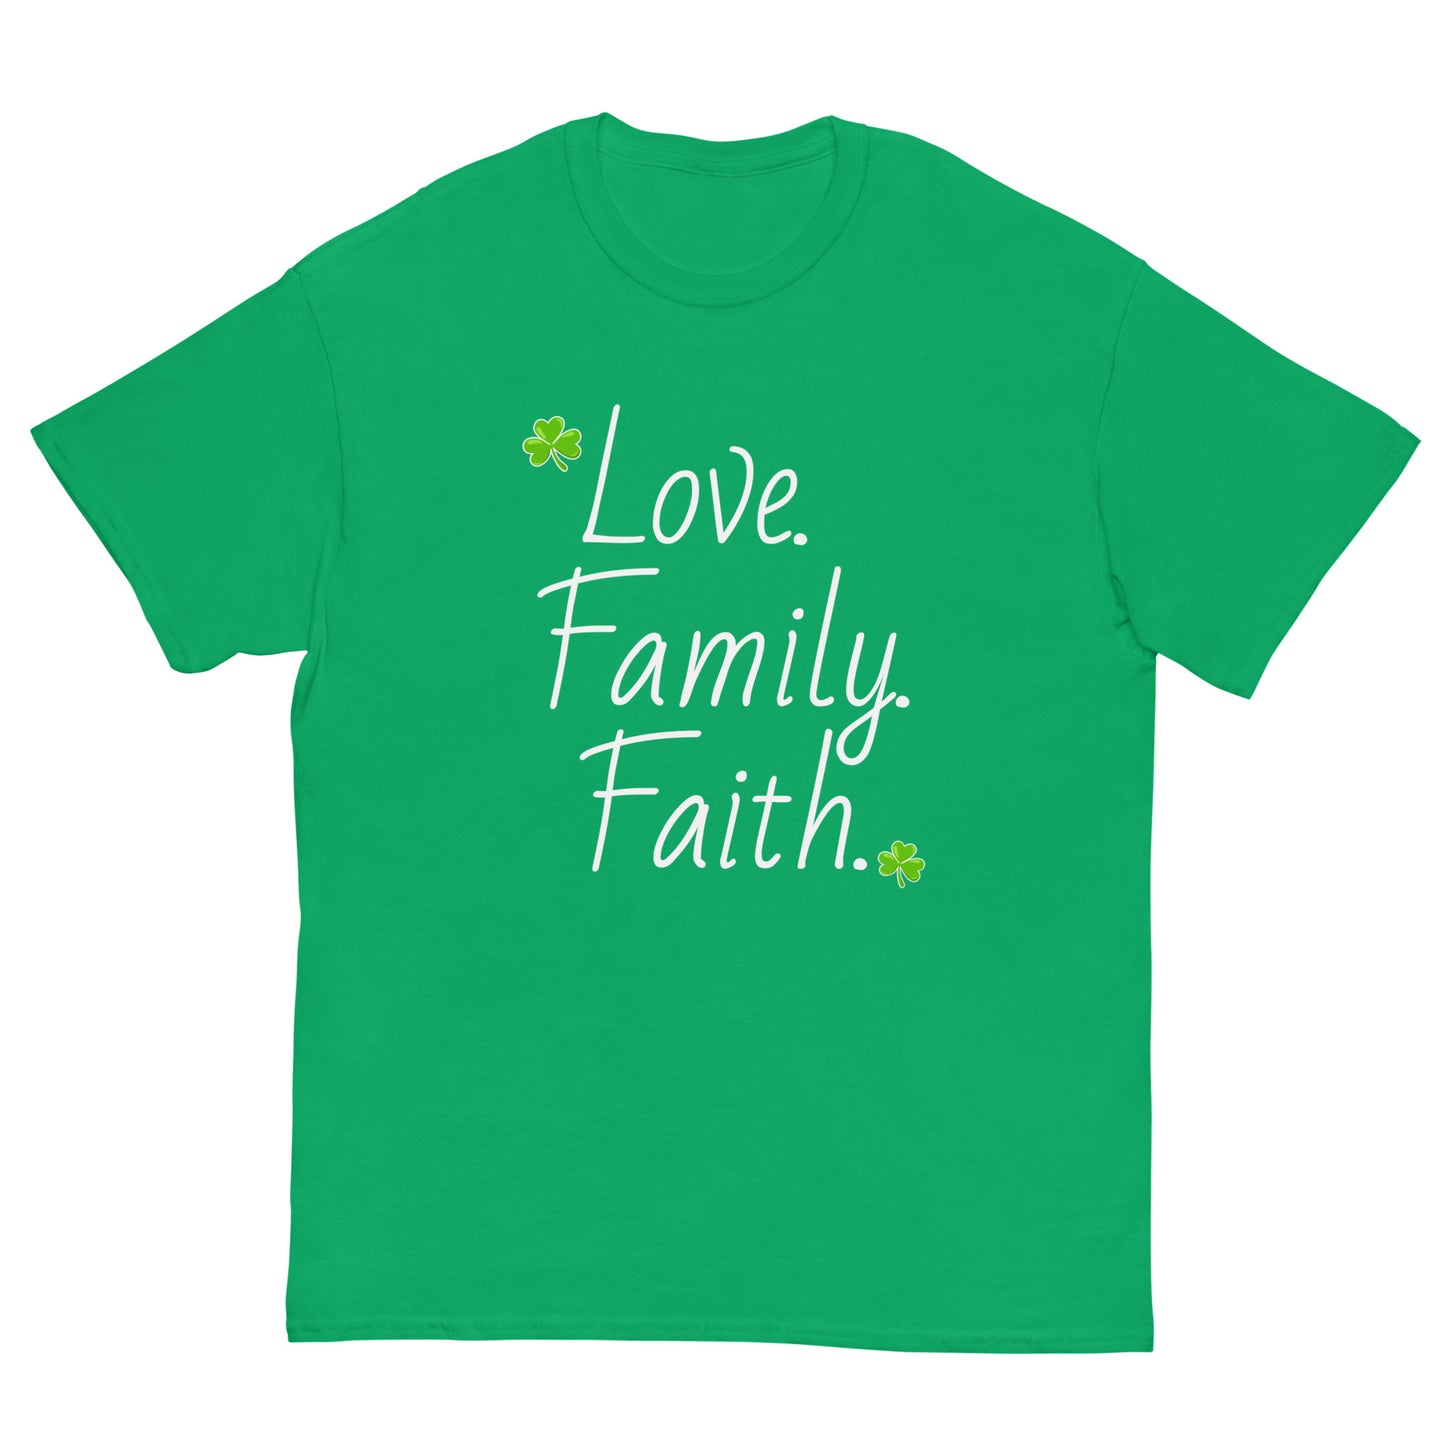 Love, Family, Faith classic tee (white design)